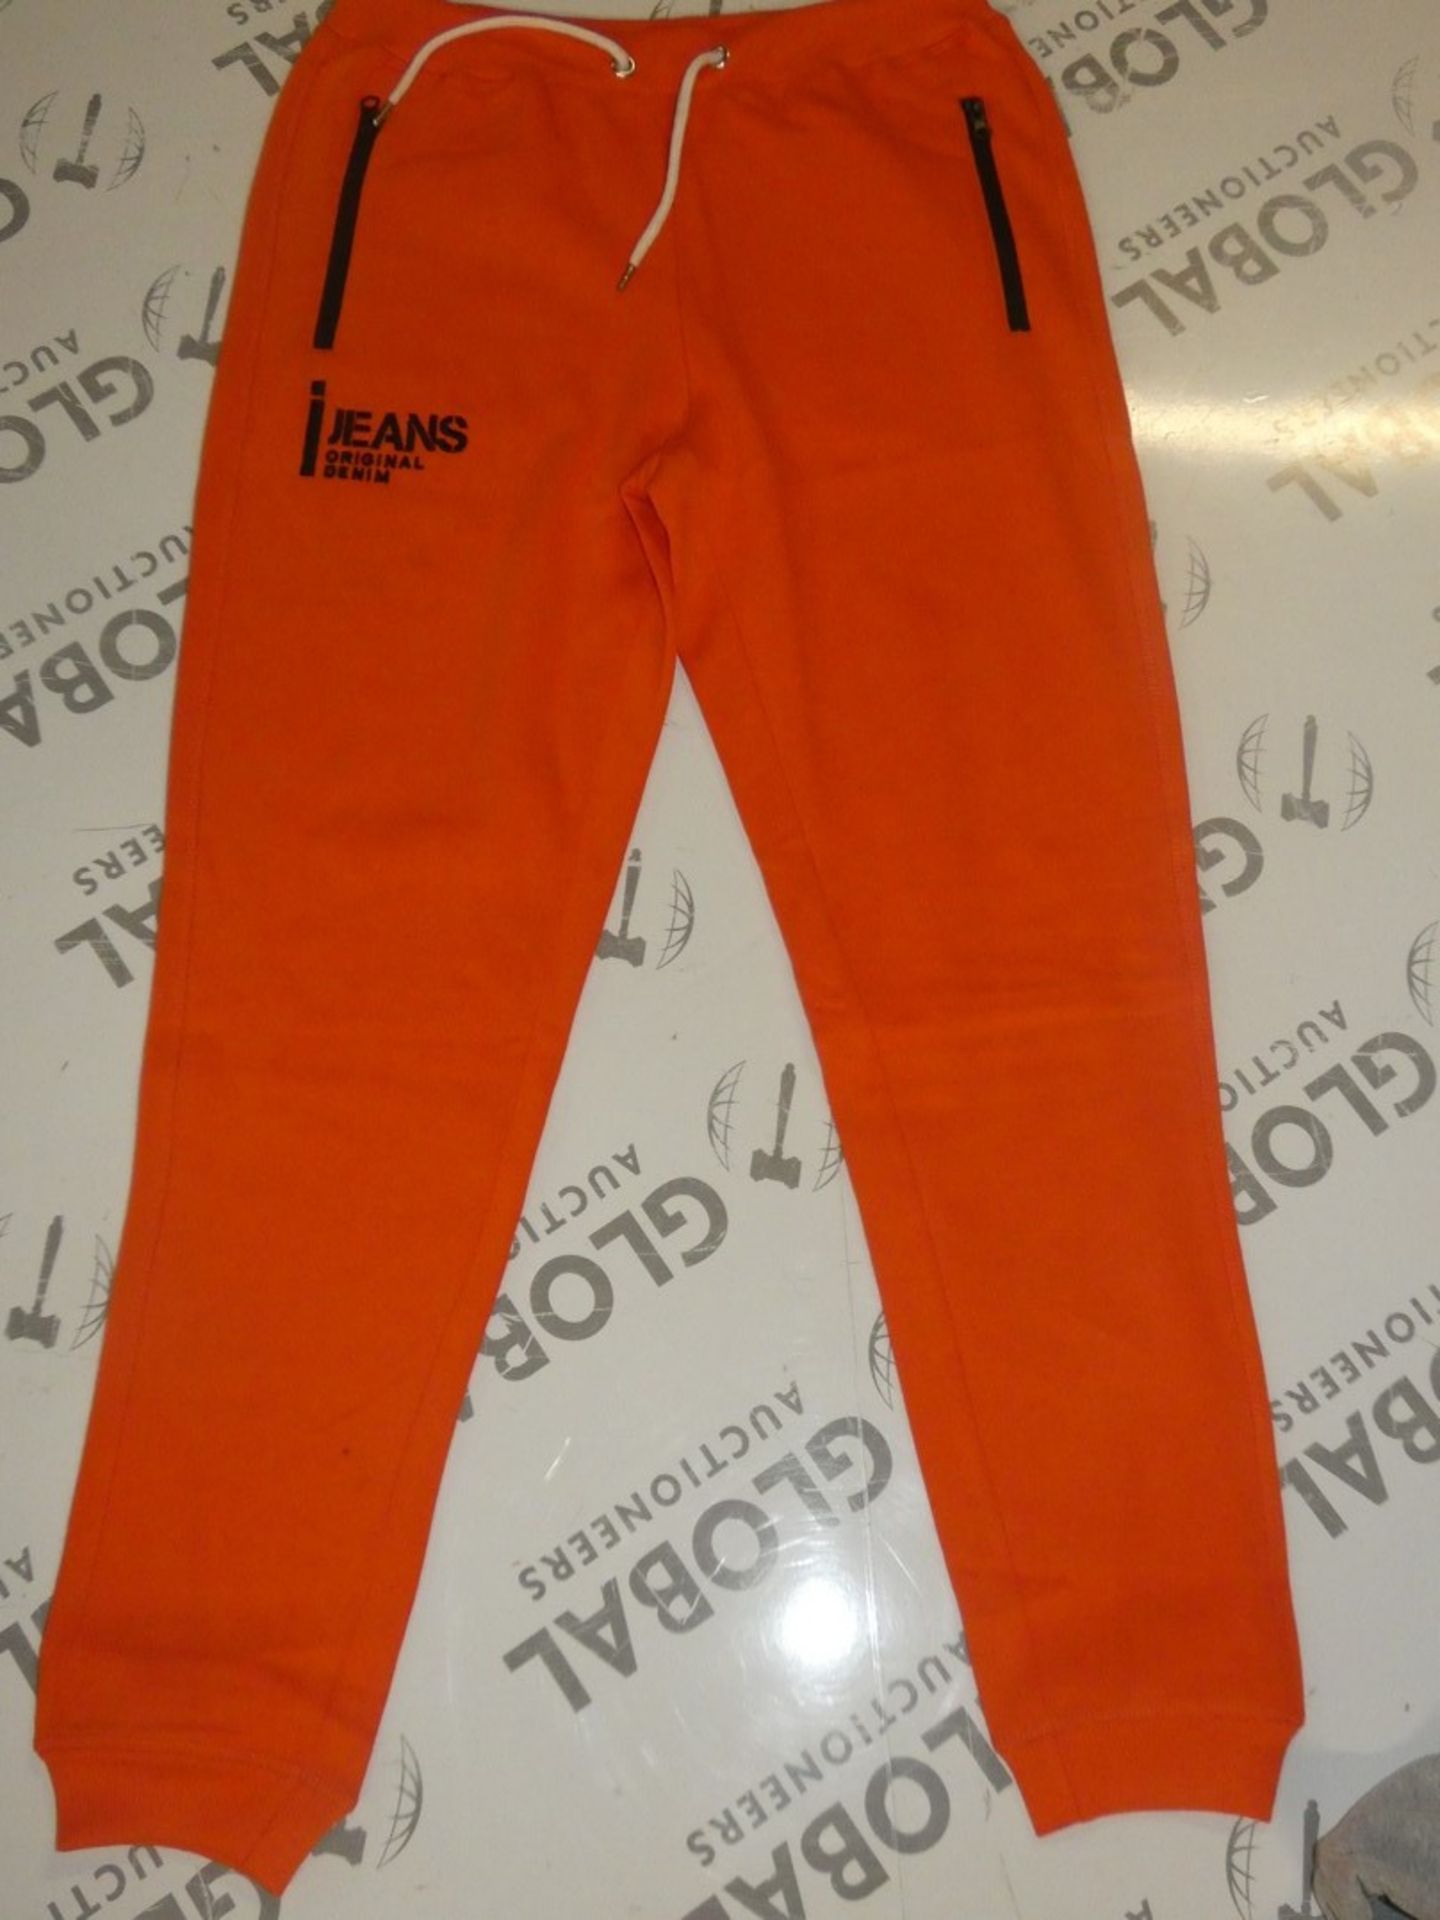 Lot to Contain 10 Brand New Pairs of Ijeans Original Denim Bright Orange Zipper Pocket Lounging